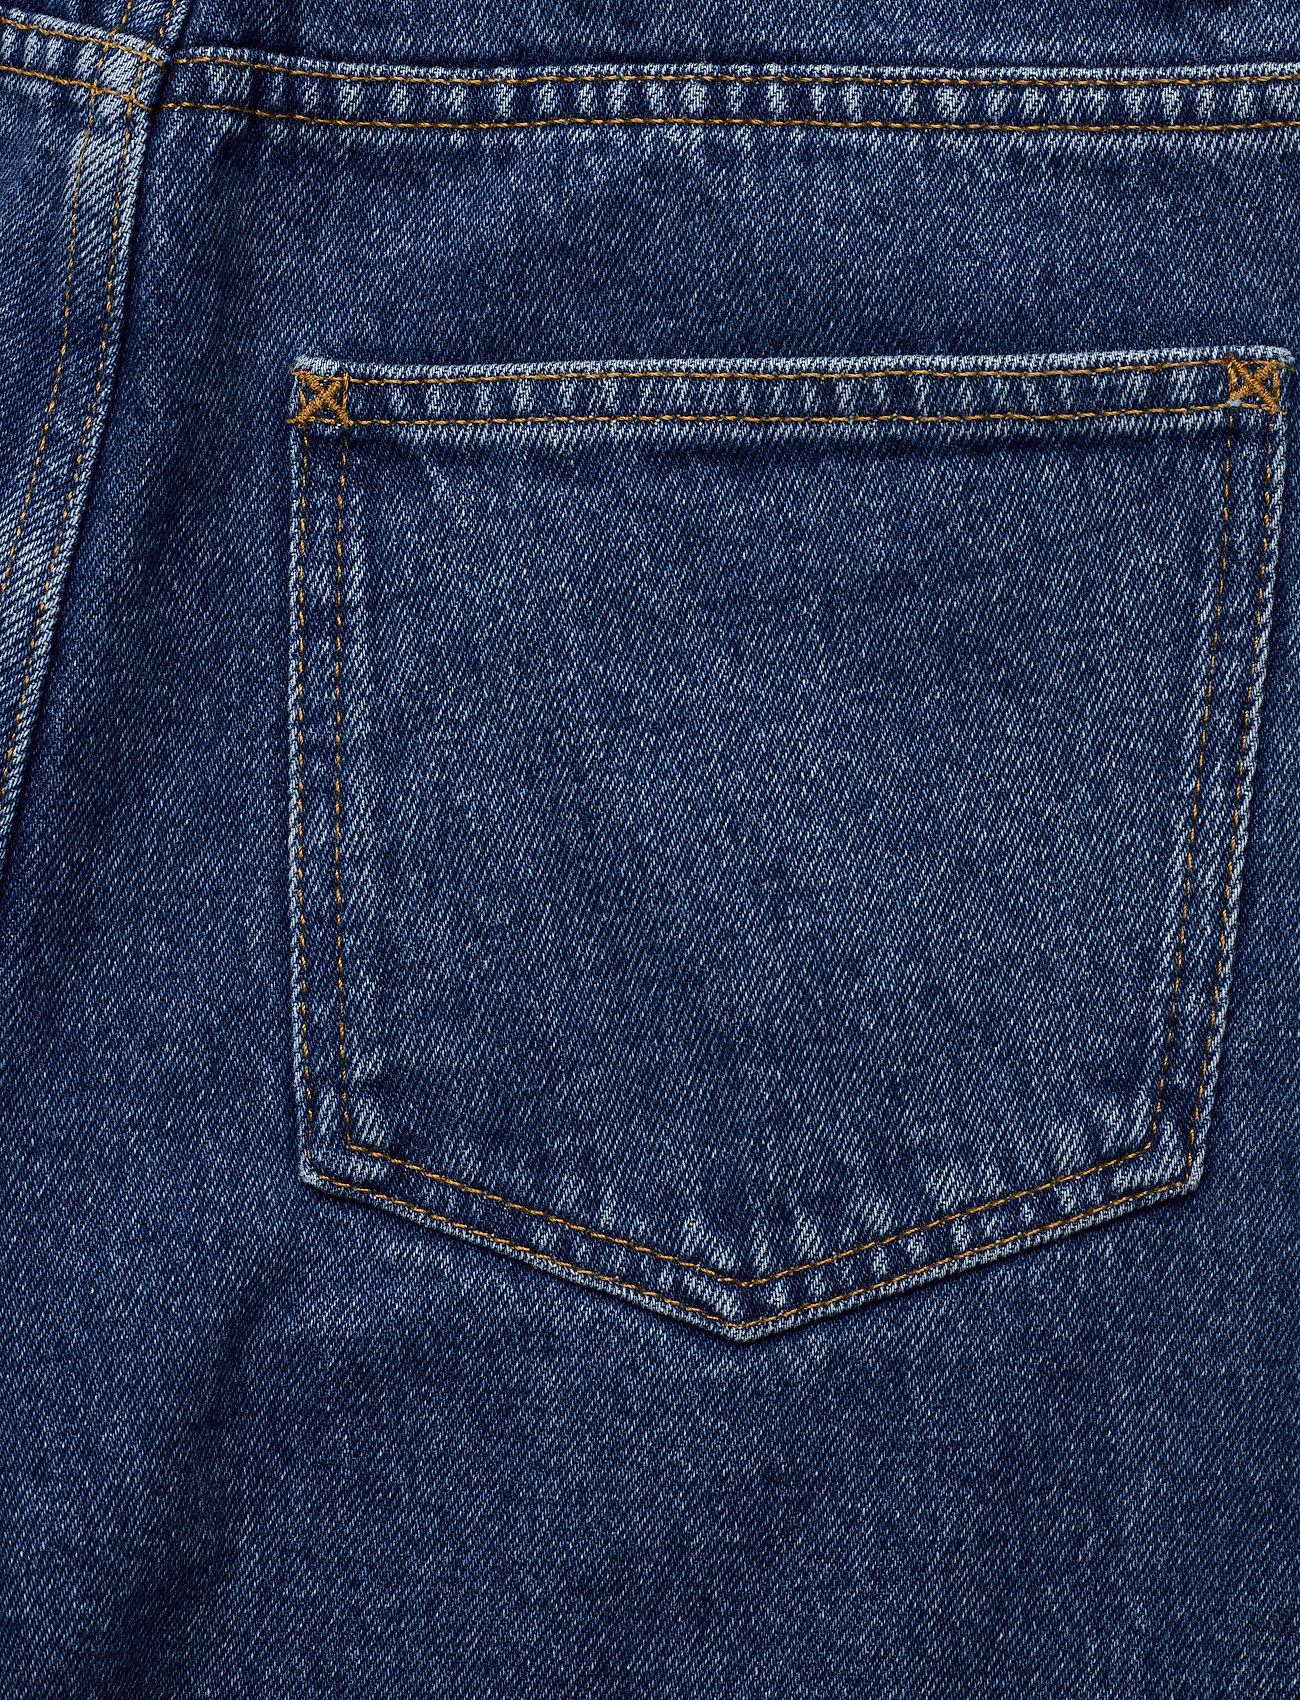 RODEBJER - RODEBJER HALL - flared jeans - vintage blue - 4